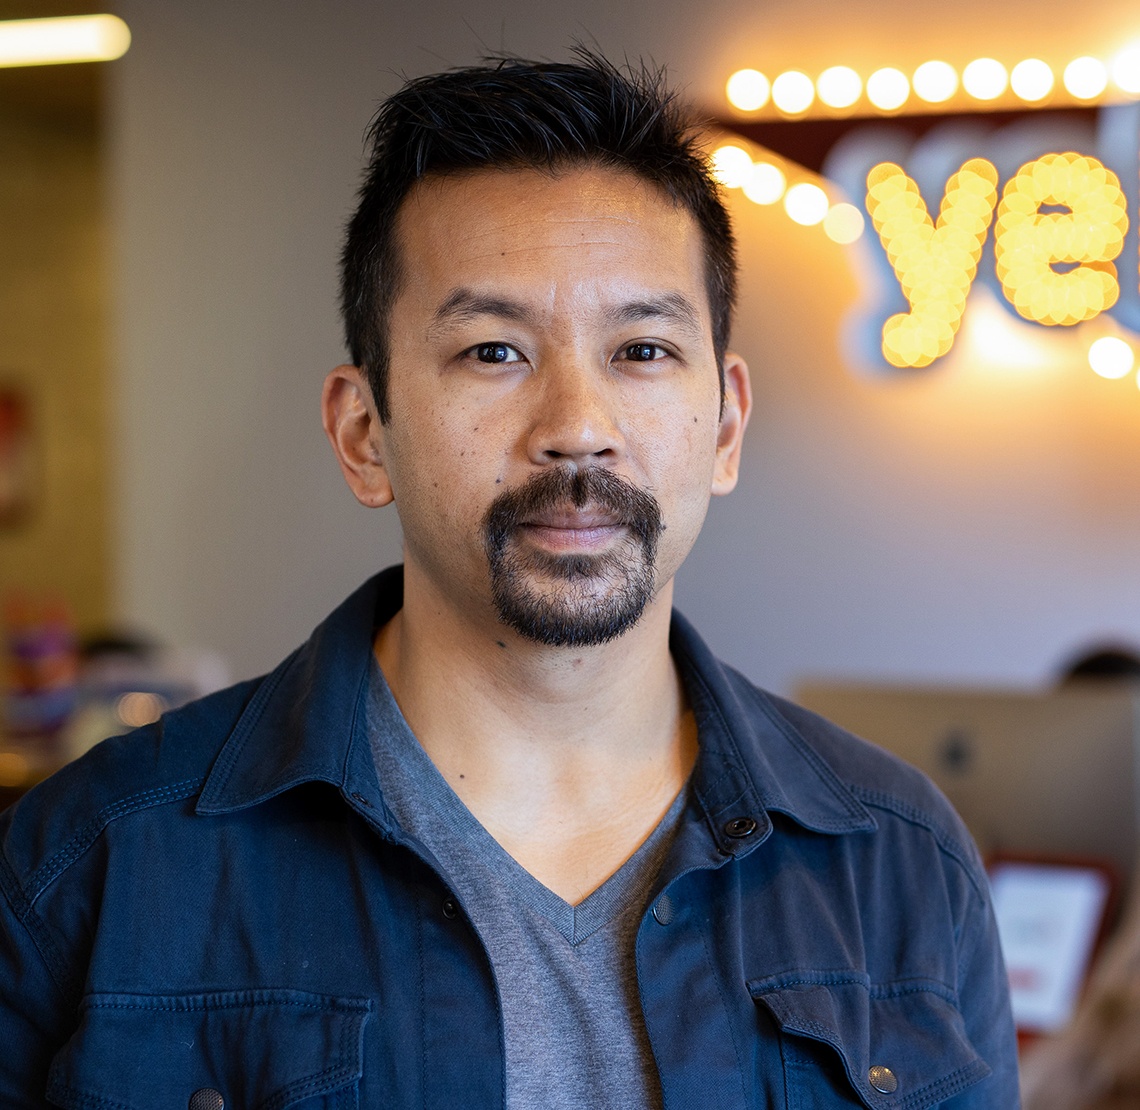 Jeryl, a veteran developer at Yelp